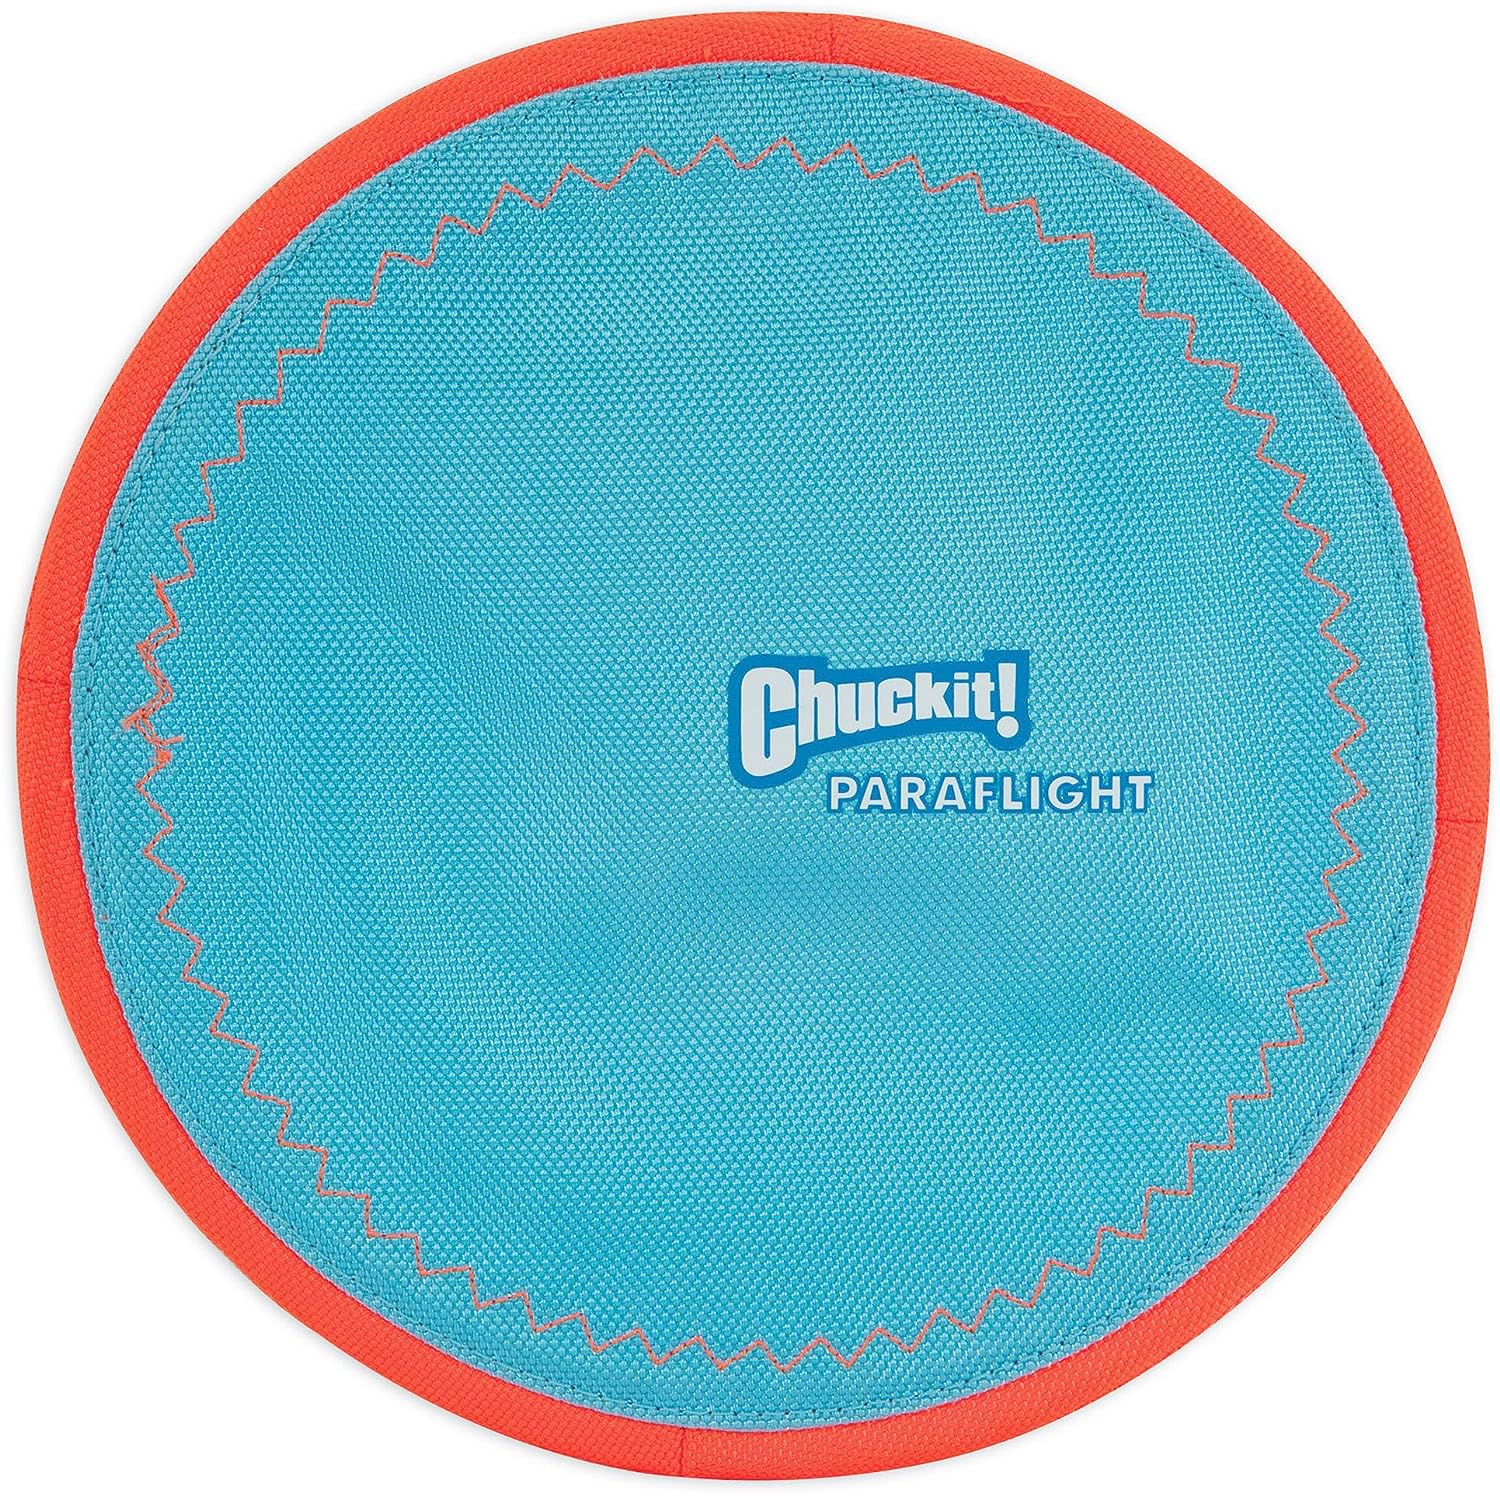 9.75" ChuckIt! Paraflight Flying Disc Dog Toy (Blue/Orange, Large) $5.95 + Free Shipping w/ Prime or on $35+